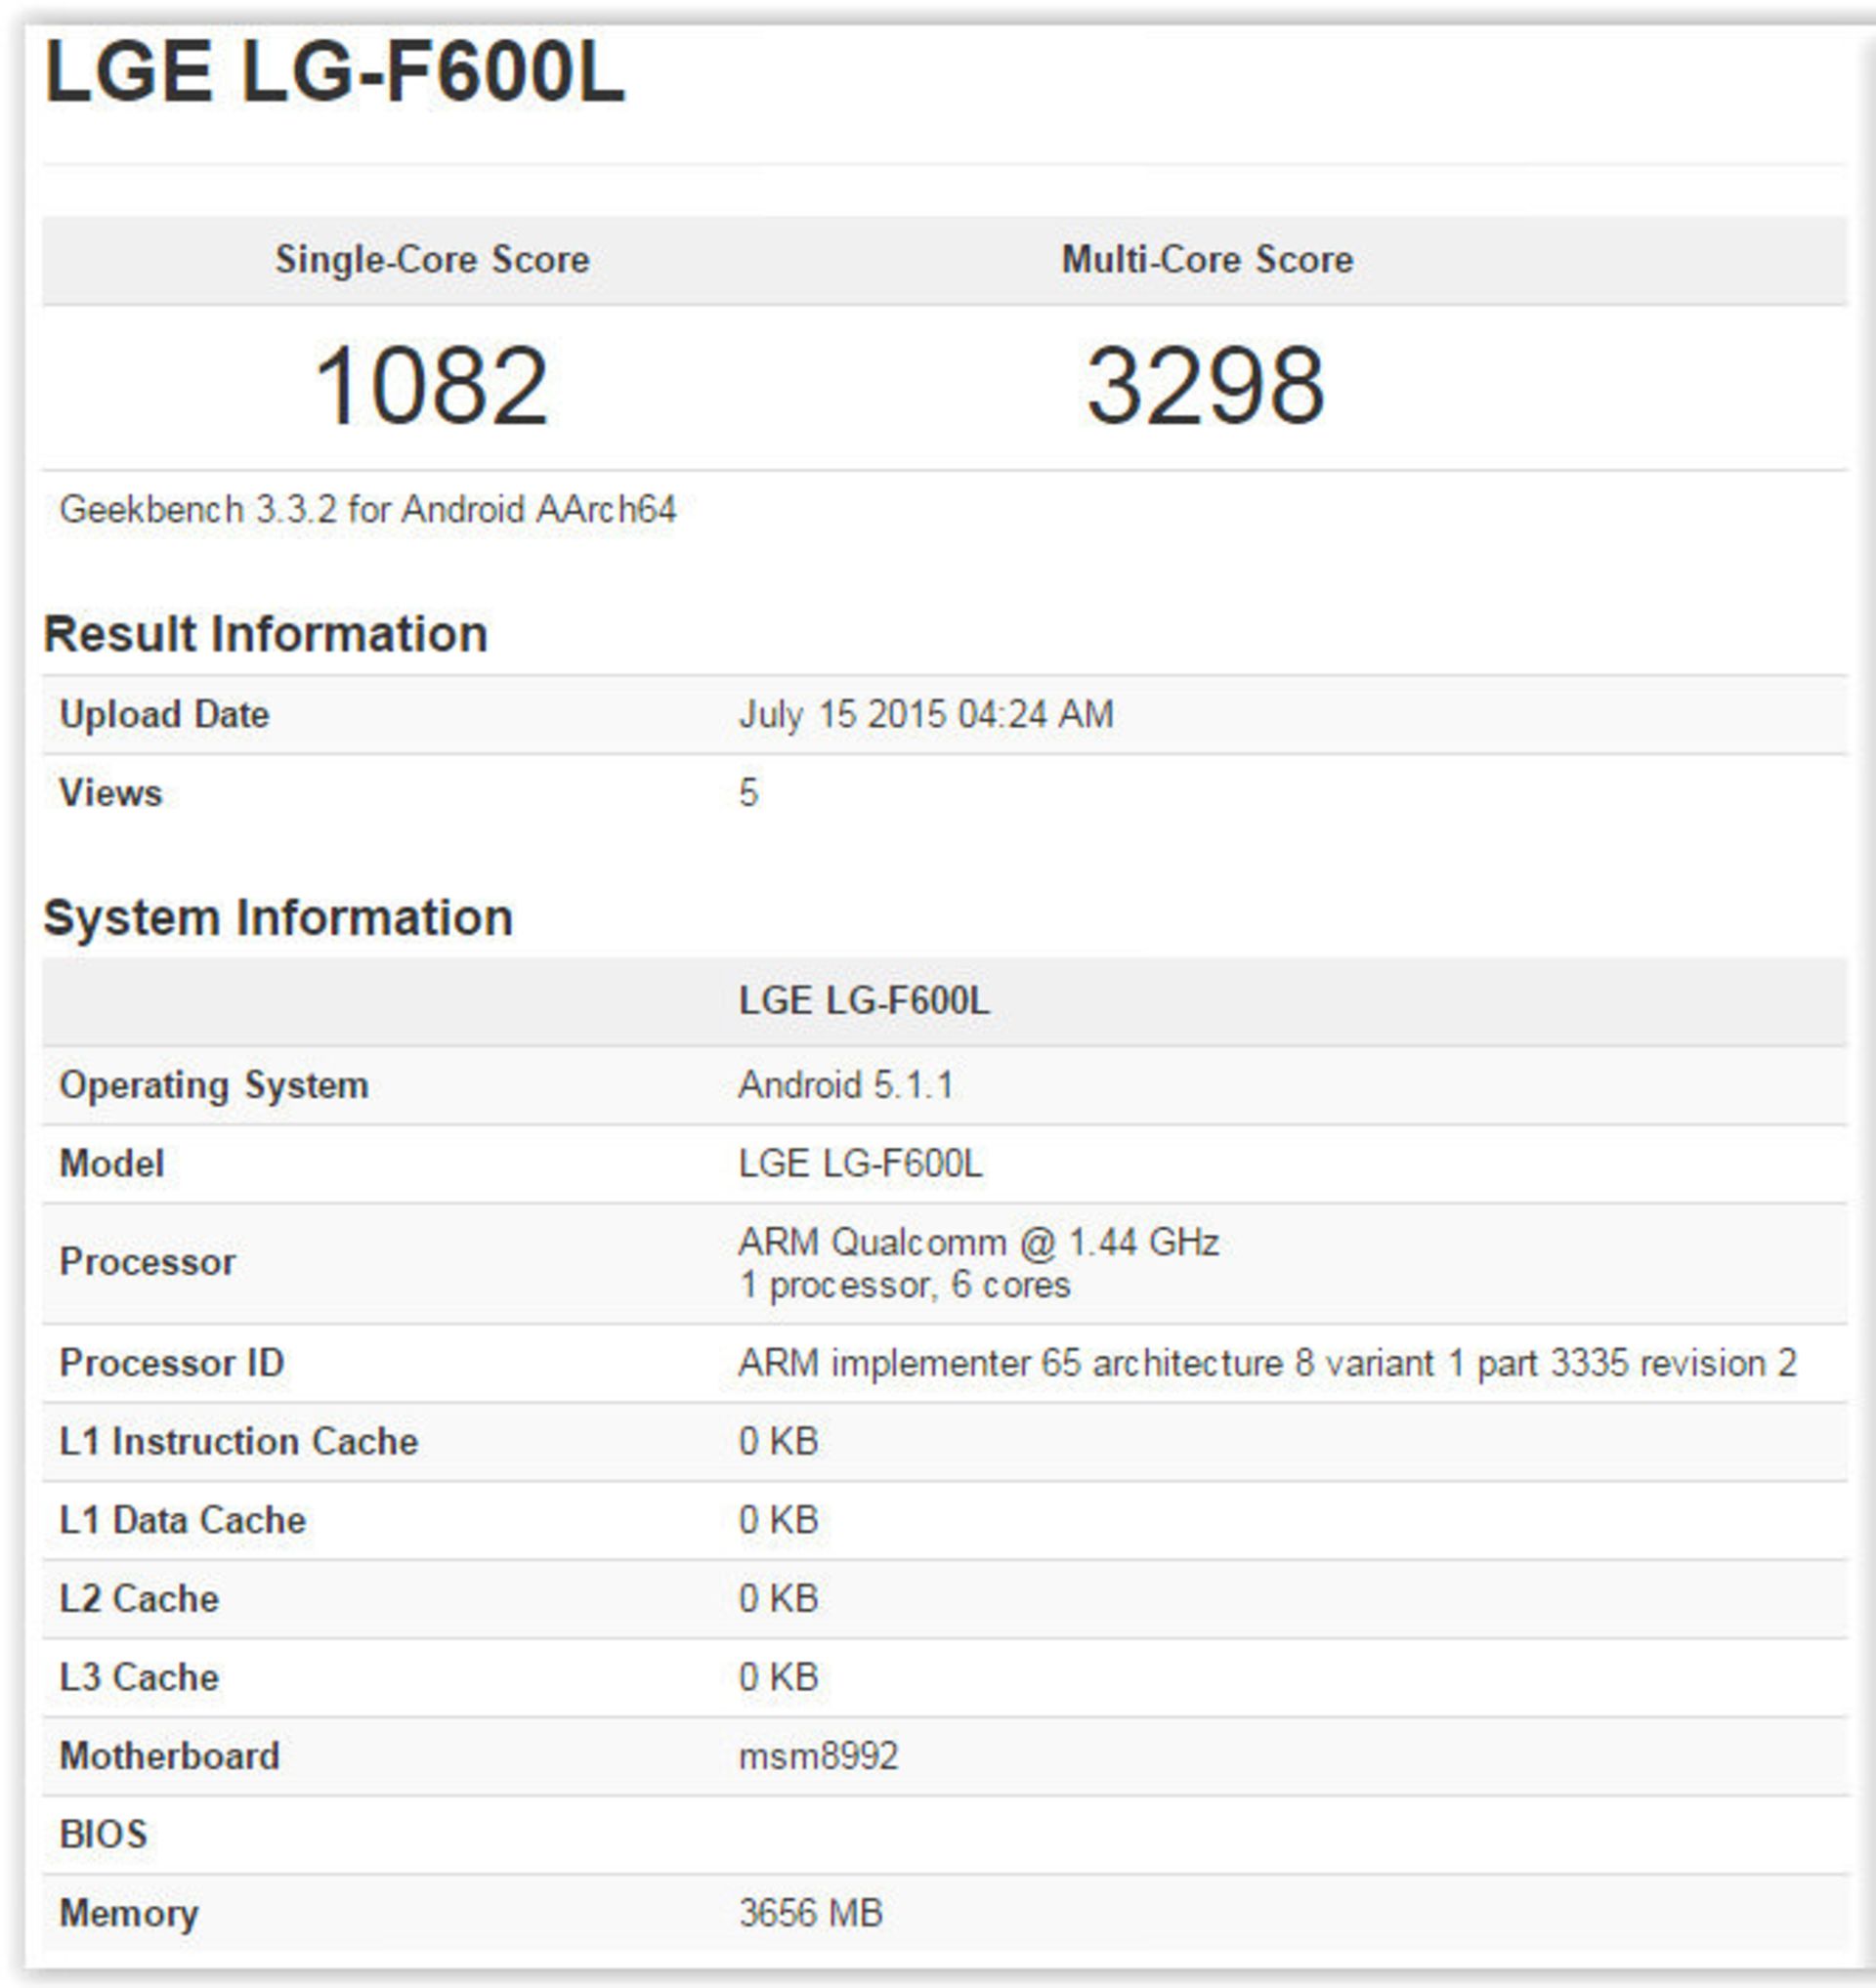 LG G4 Pro or nexus 5 2015 benchmark leak